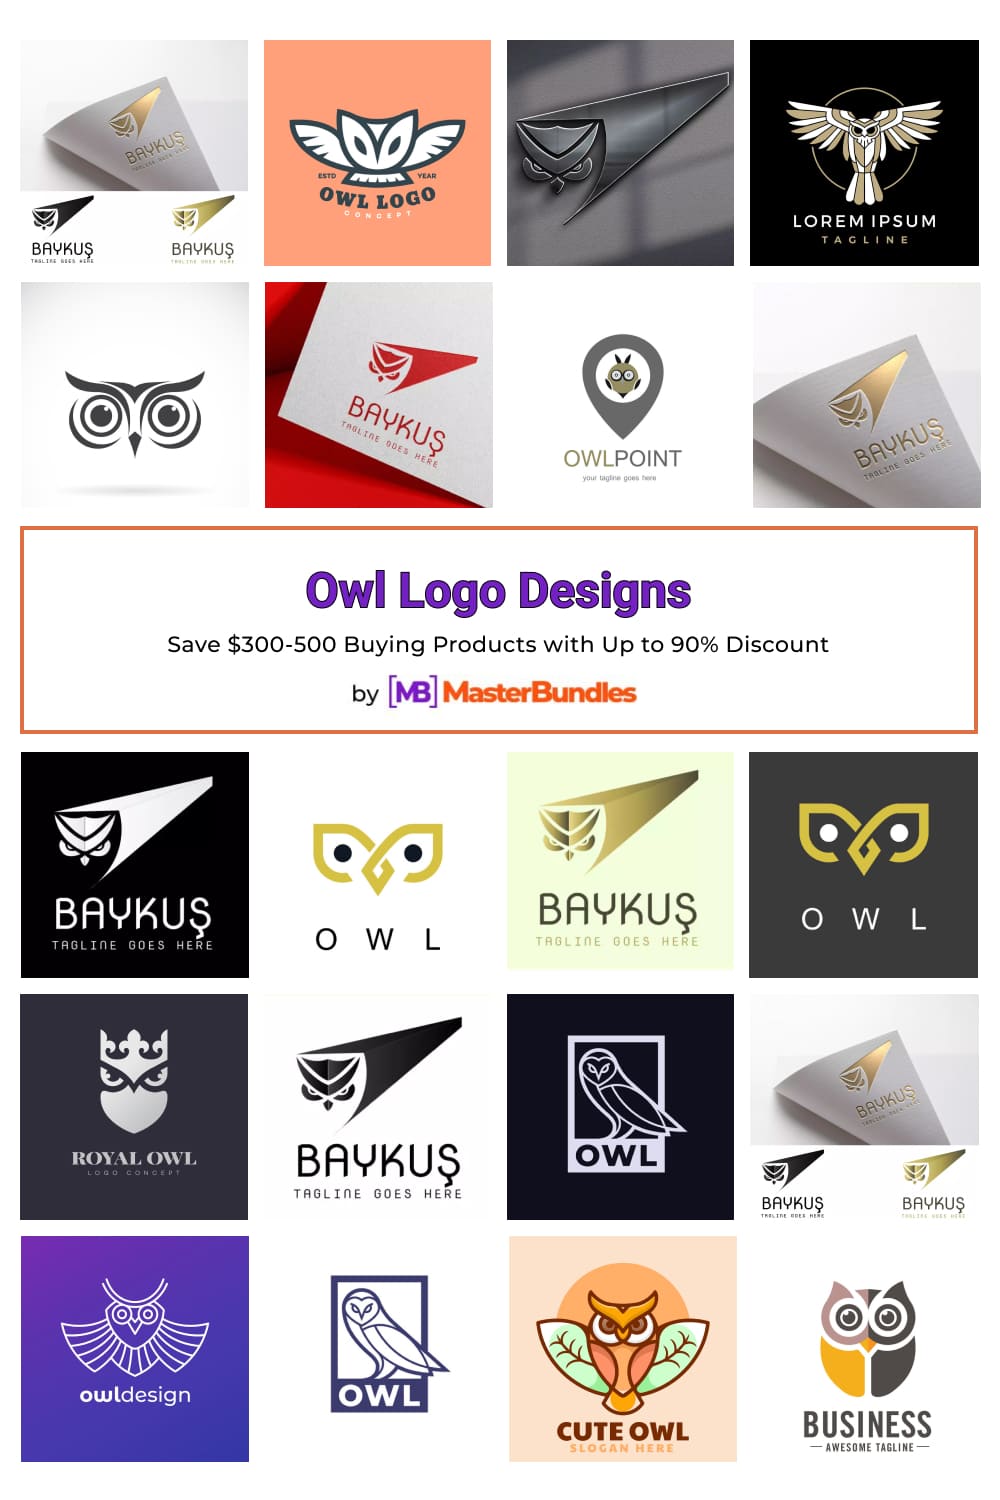 Owl Logo Designs Pinterest image.